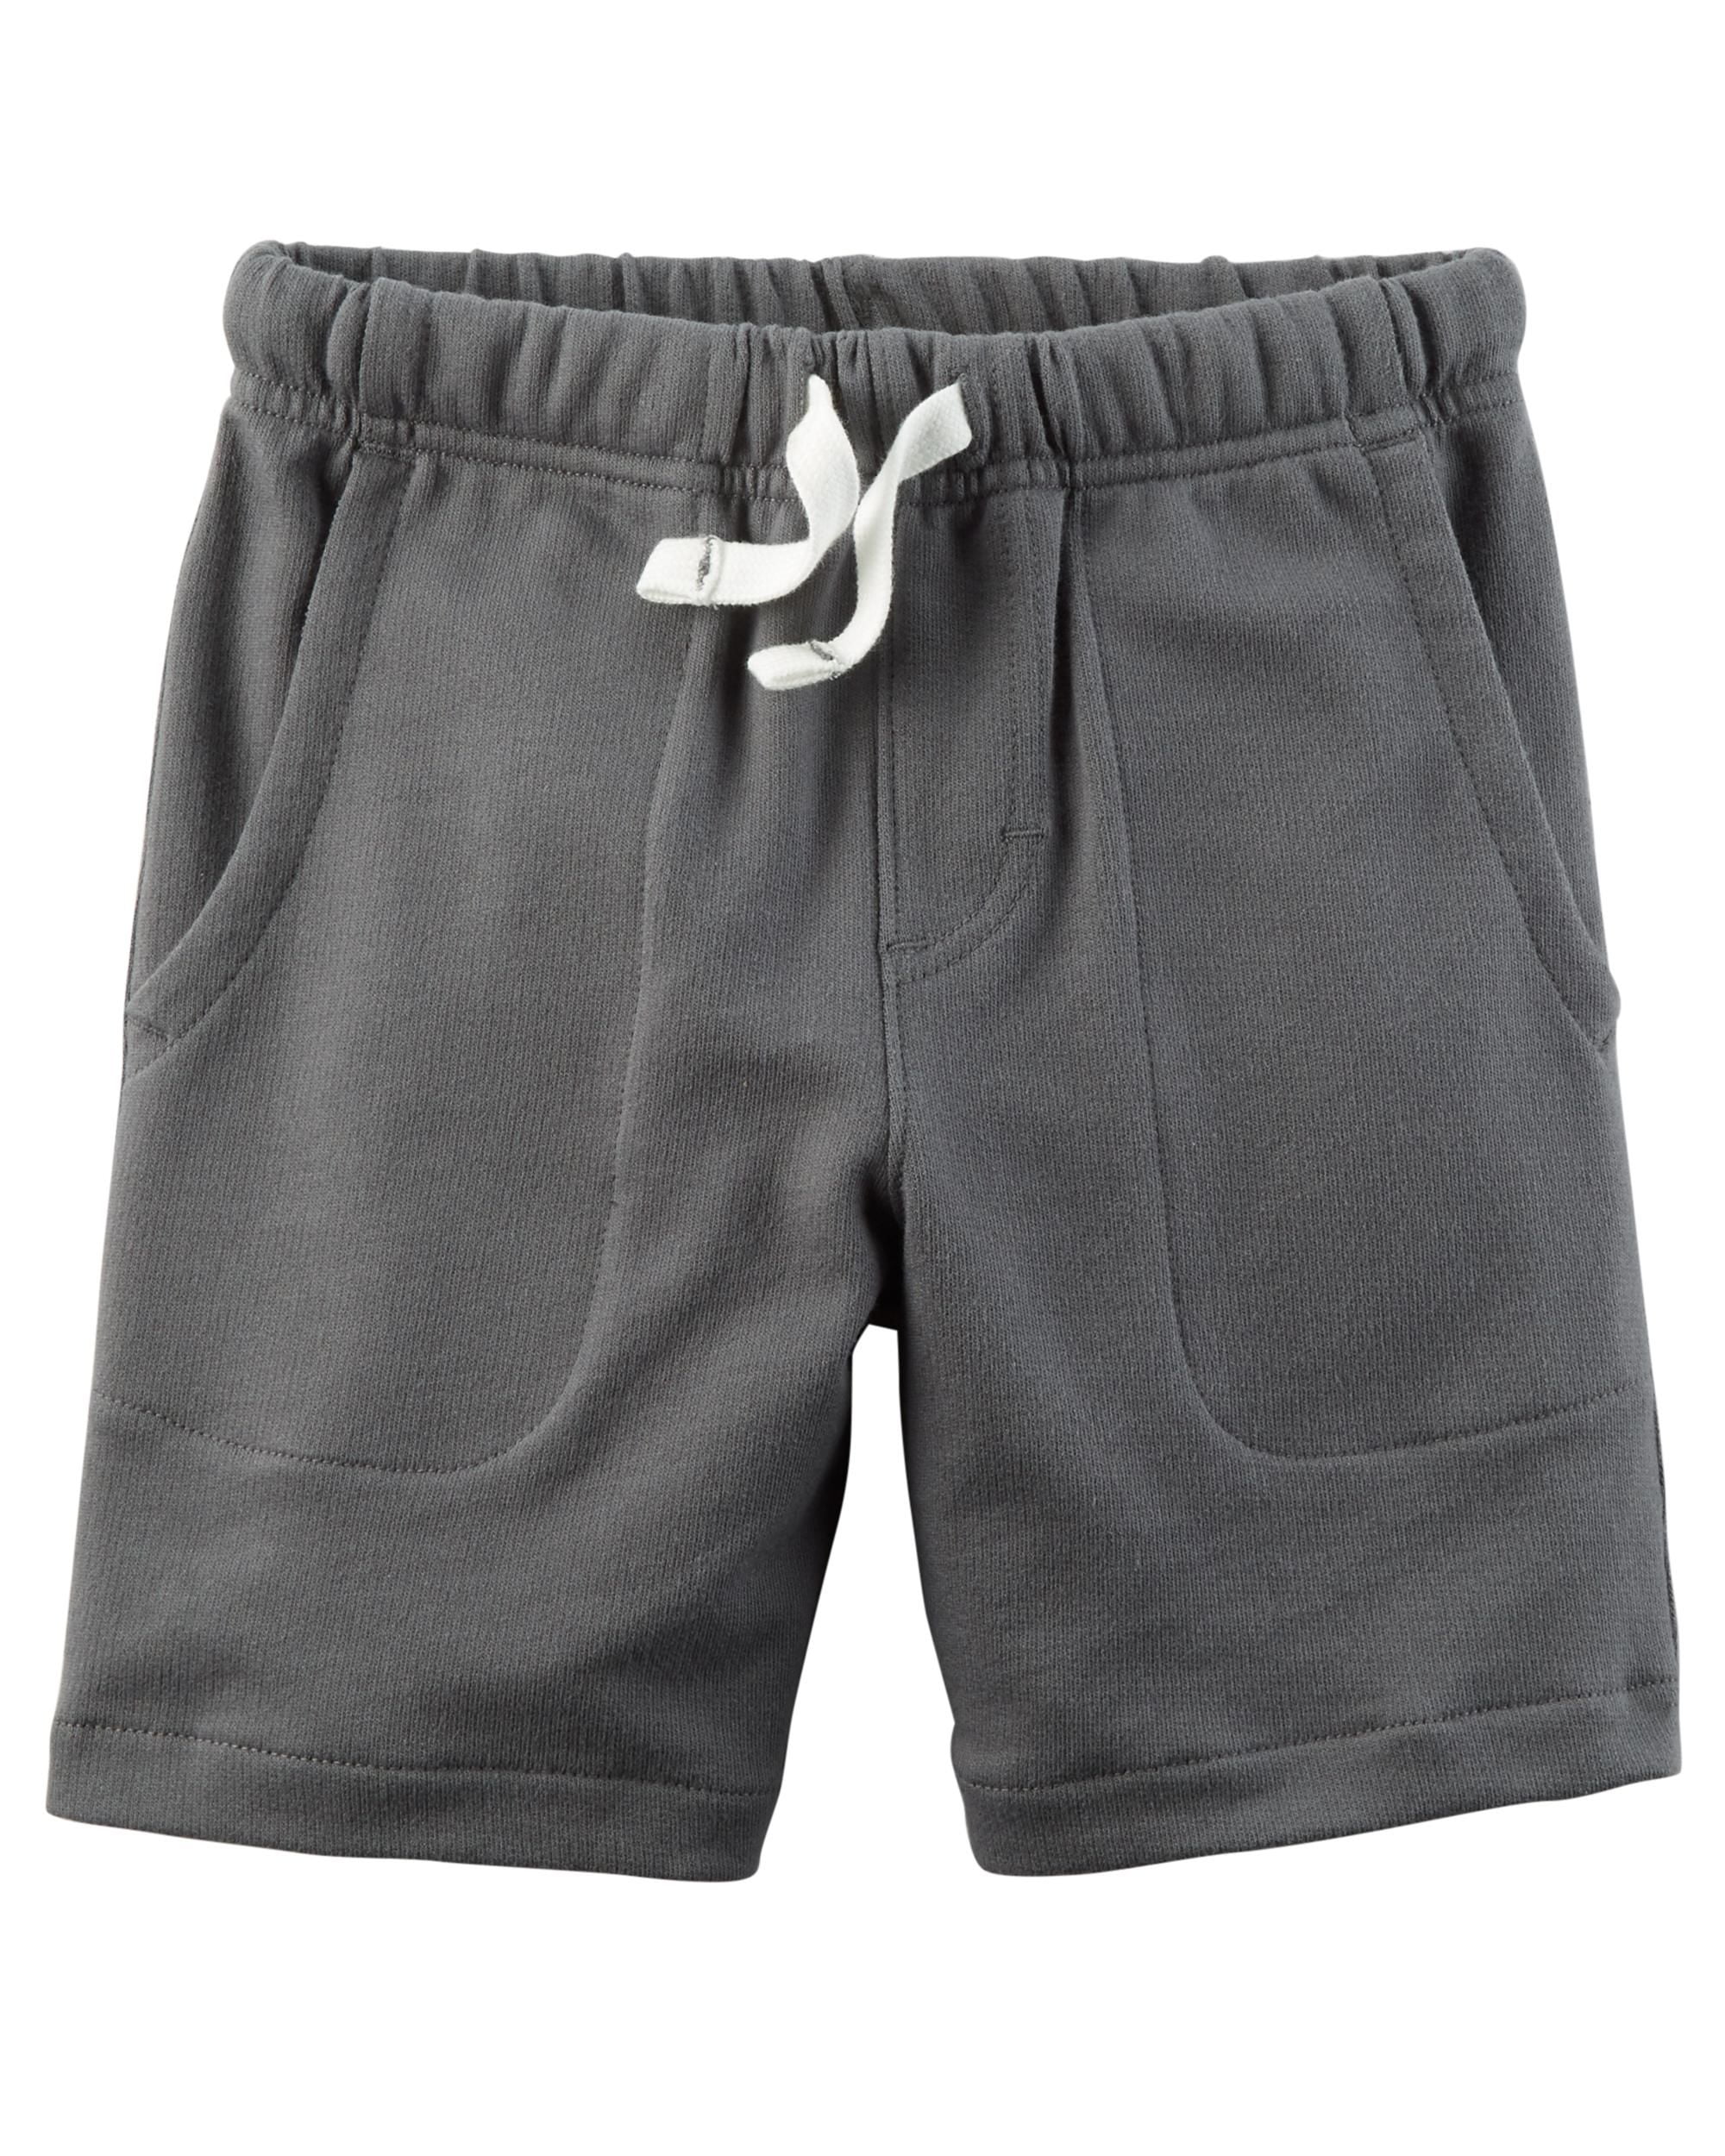 Carter's Boys' French Terry Shorts - Grey- 3T - Walmart.com